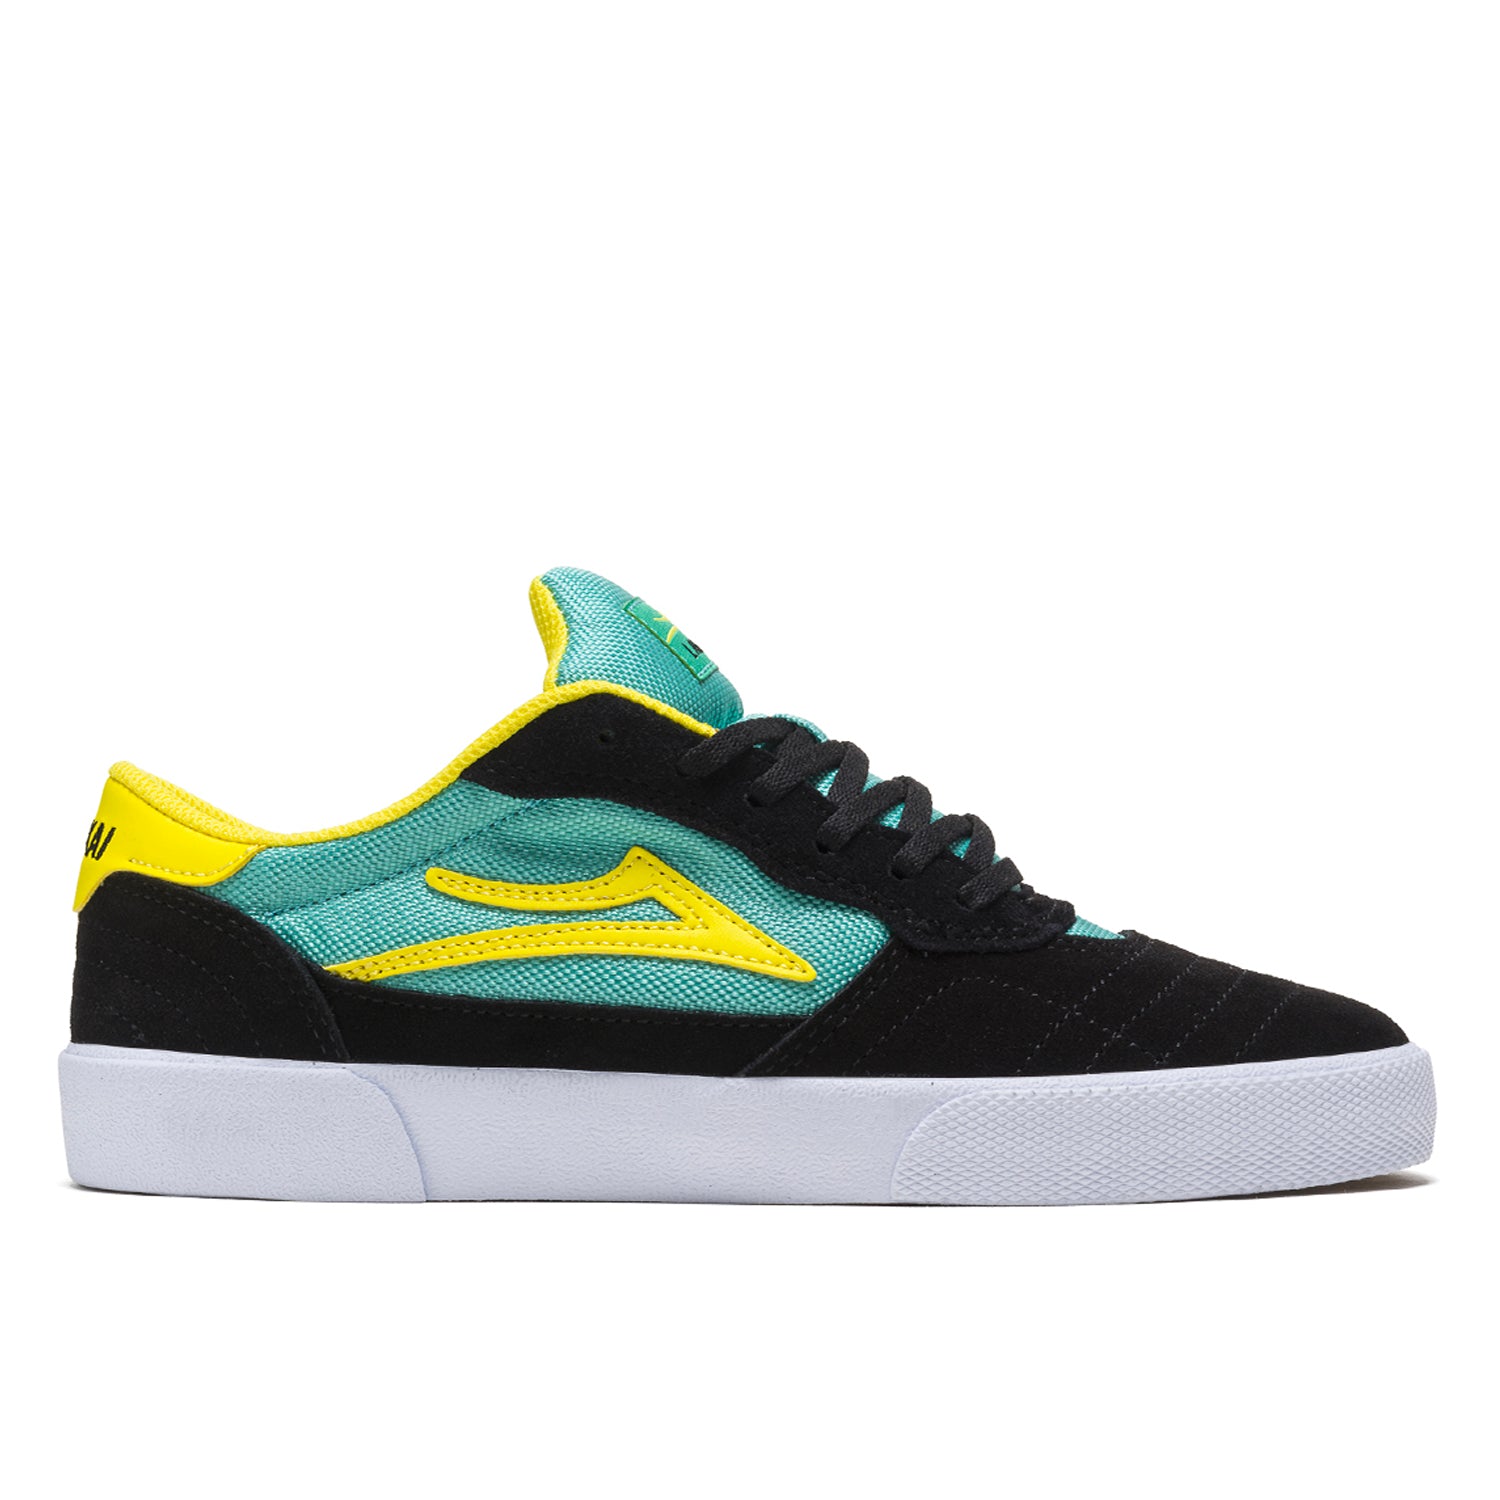 Lakai Cambridge Skate Shoes - Black/Teal Suede - Prime Delux Store